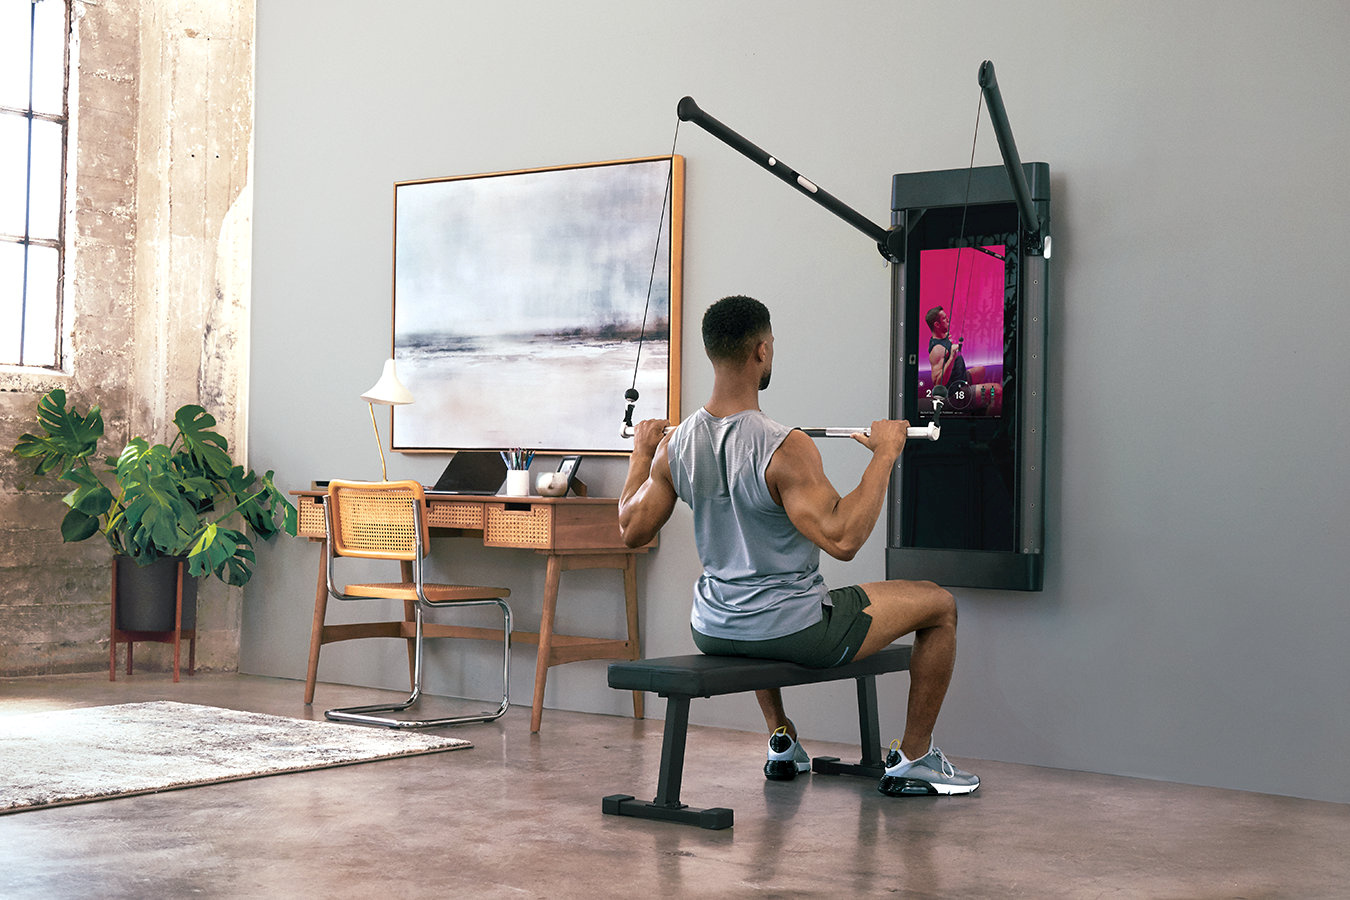 Digital gym-on-a-wall startup Tonal raises $250 mln at $1.6. bln valuation